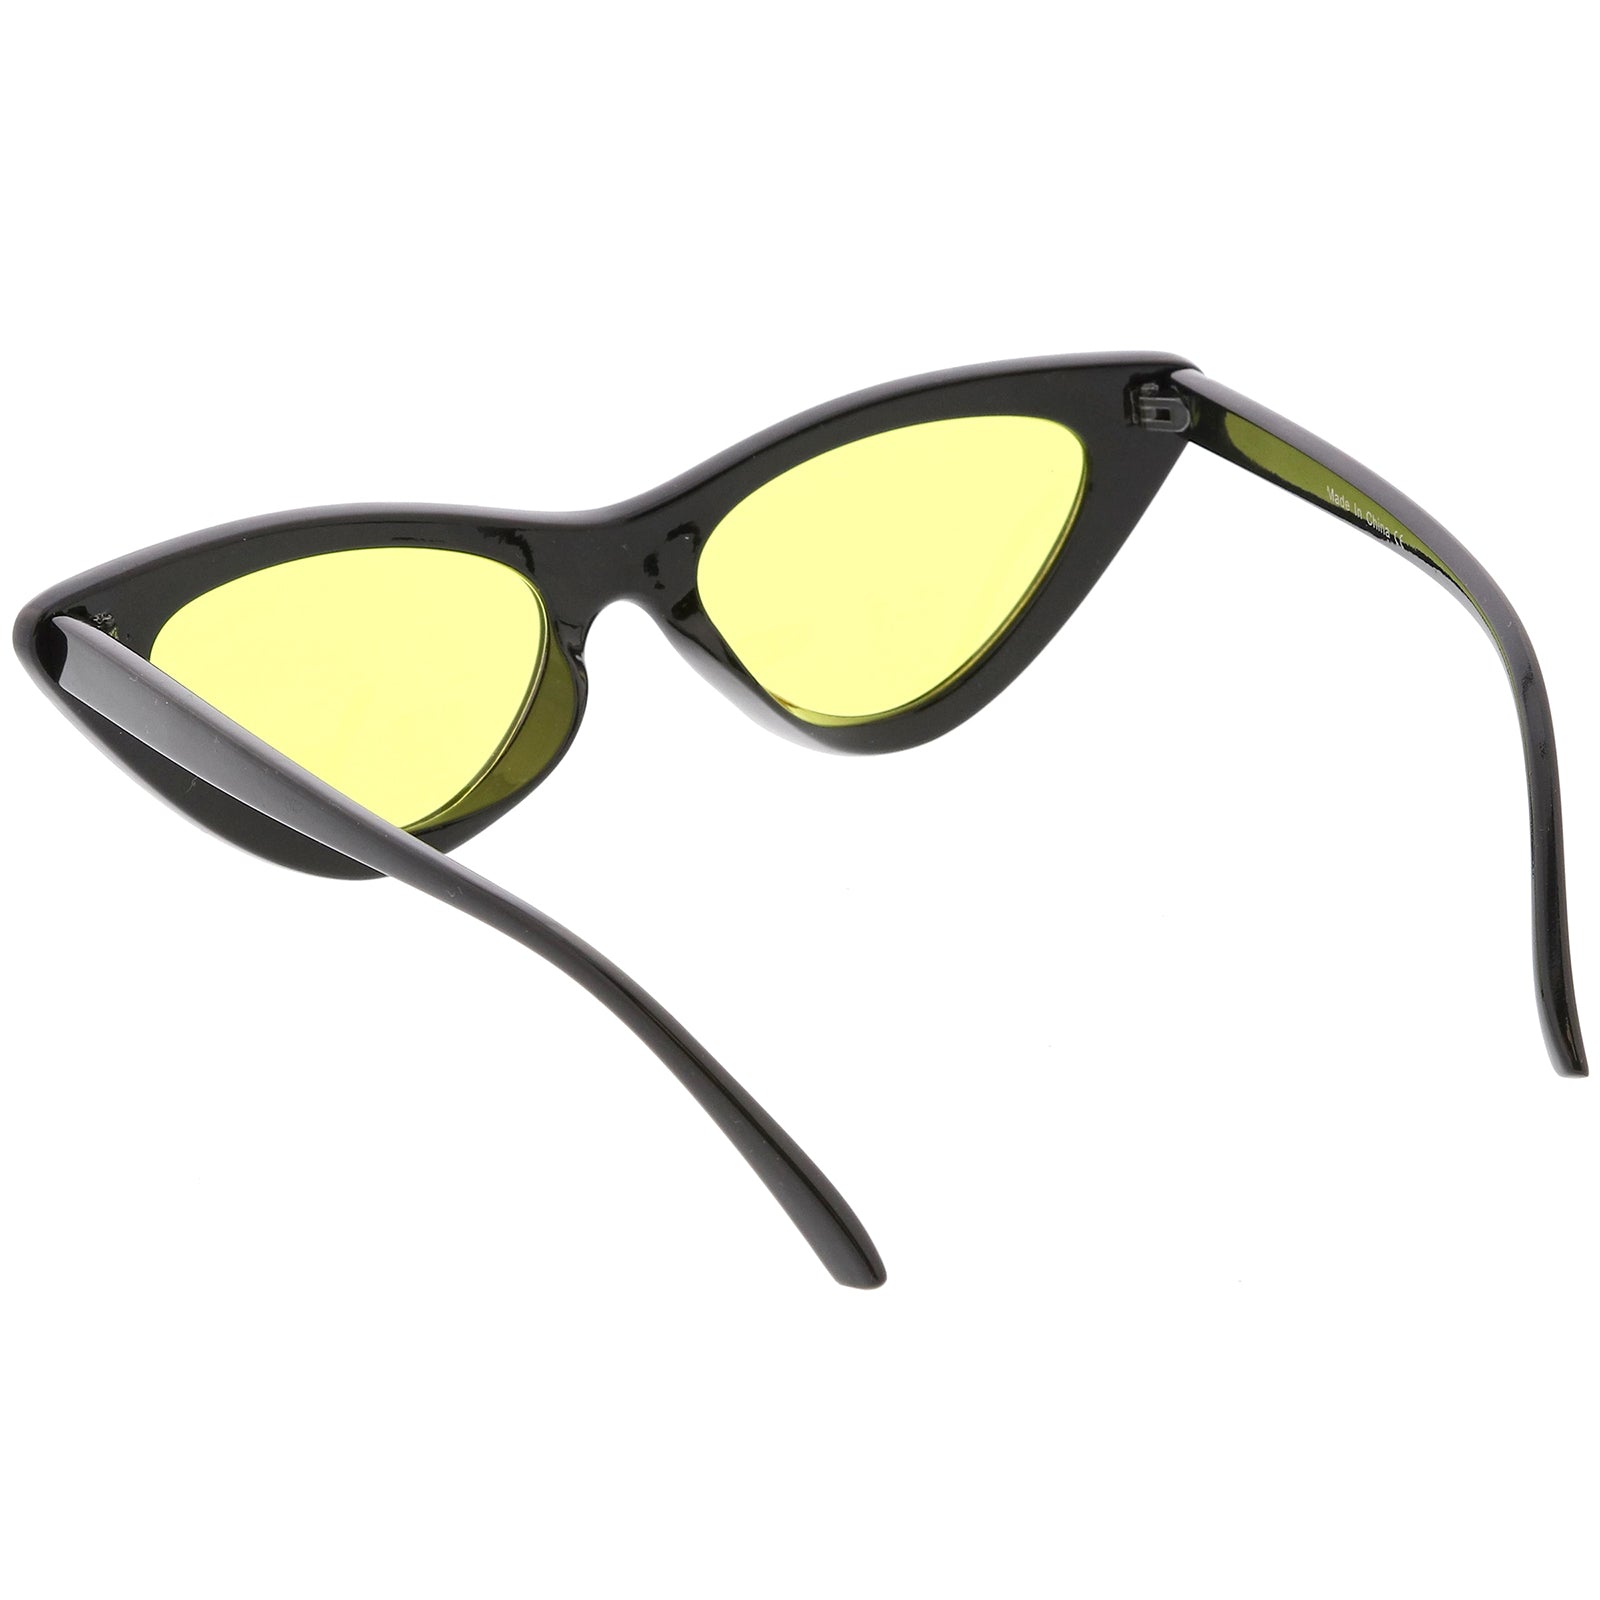 SUSTYA - Women Fashion Tinted Cat Eye Sunglasses Black